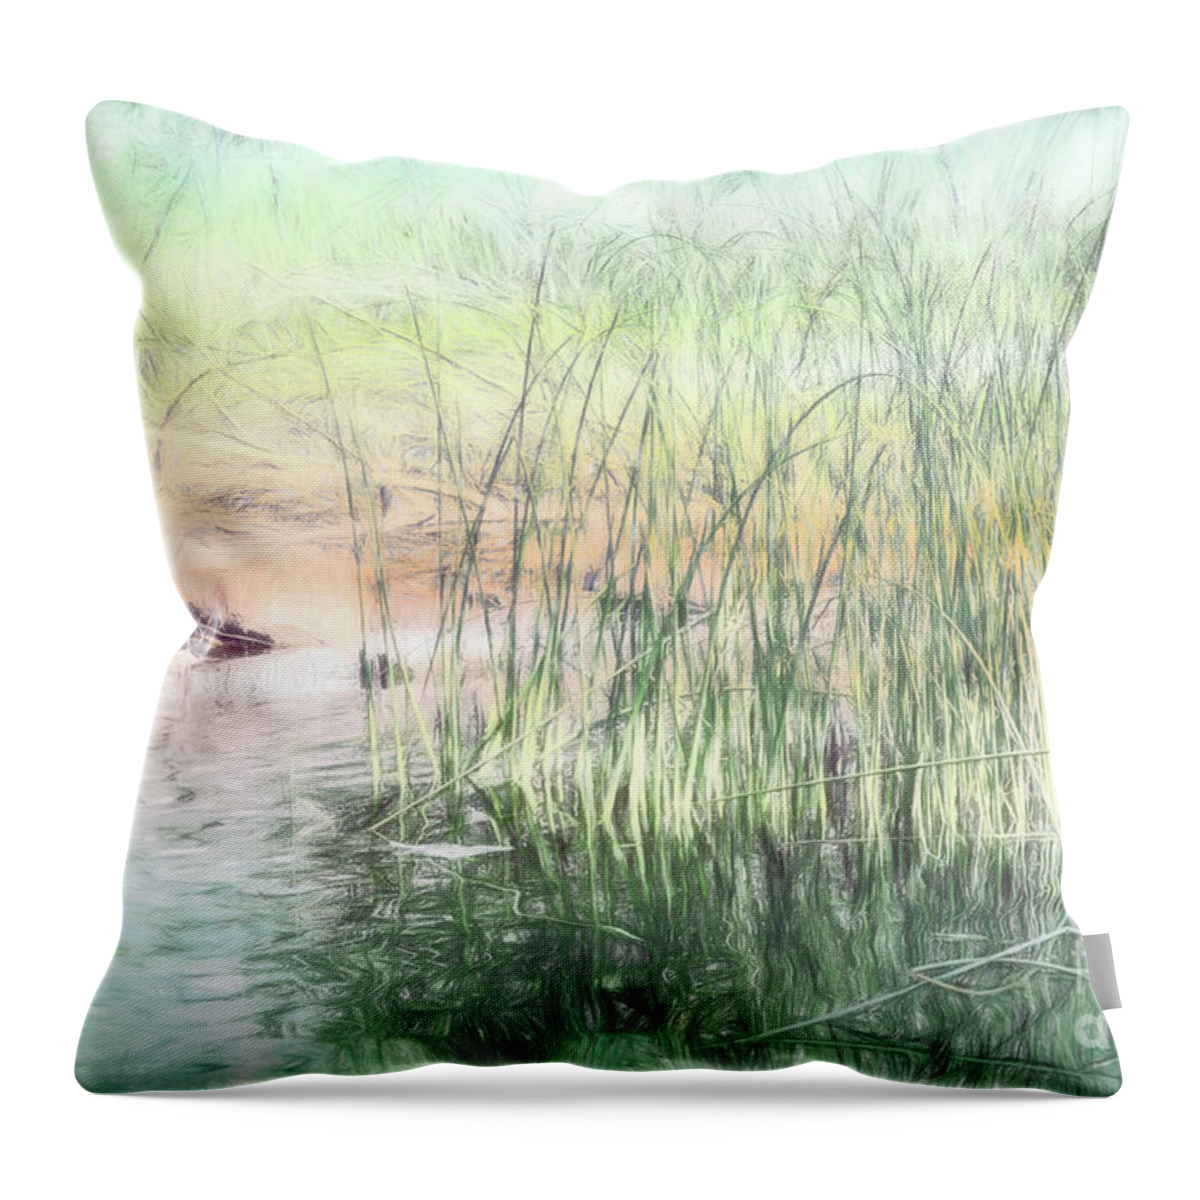 Lake Throw Pillow featuring the digital art Summer Lake Reeds by Jean OKeeffe Macro Abundance Art